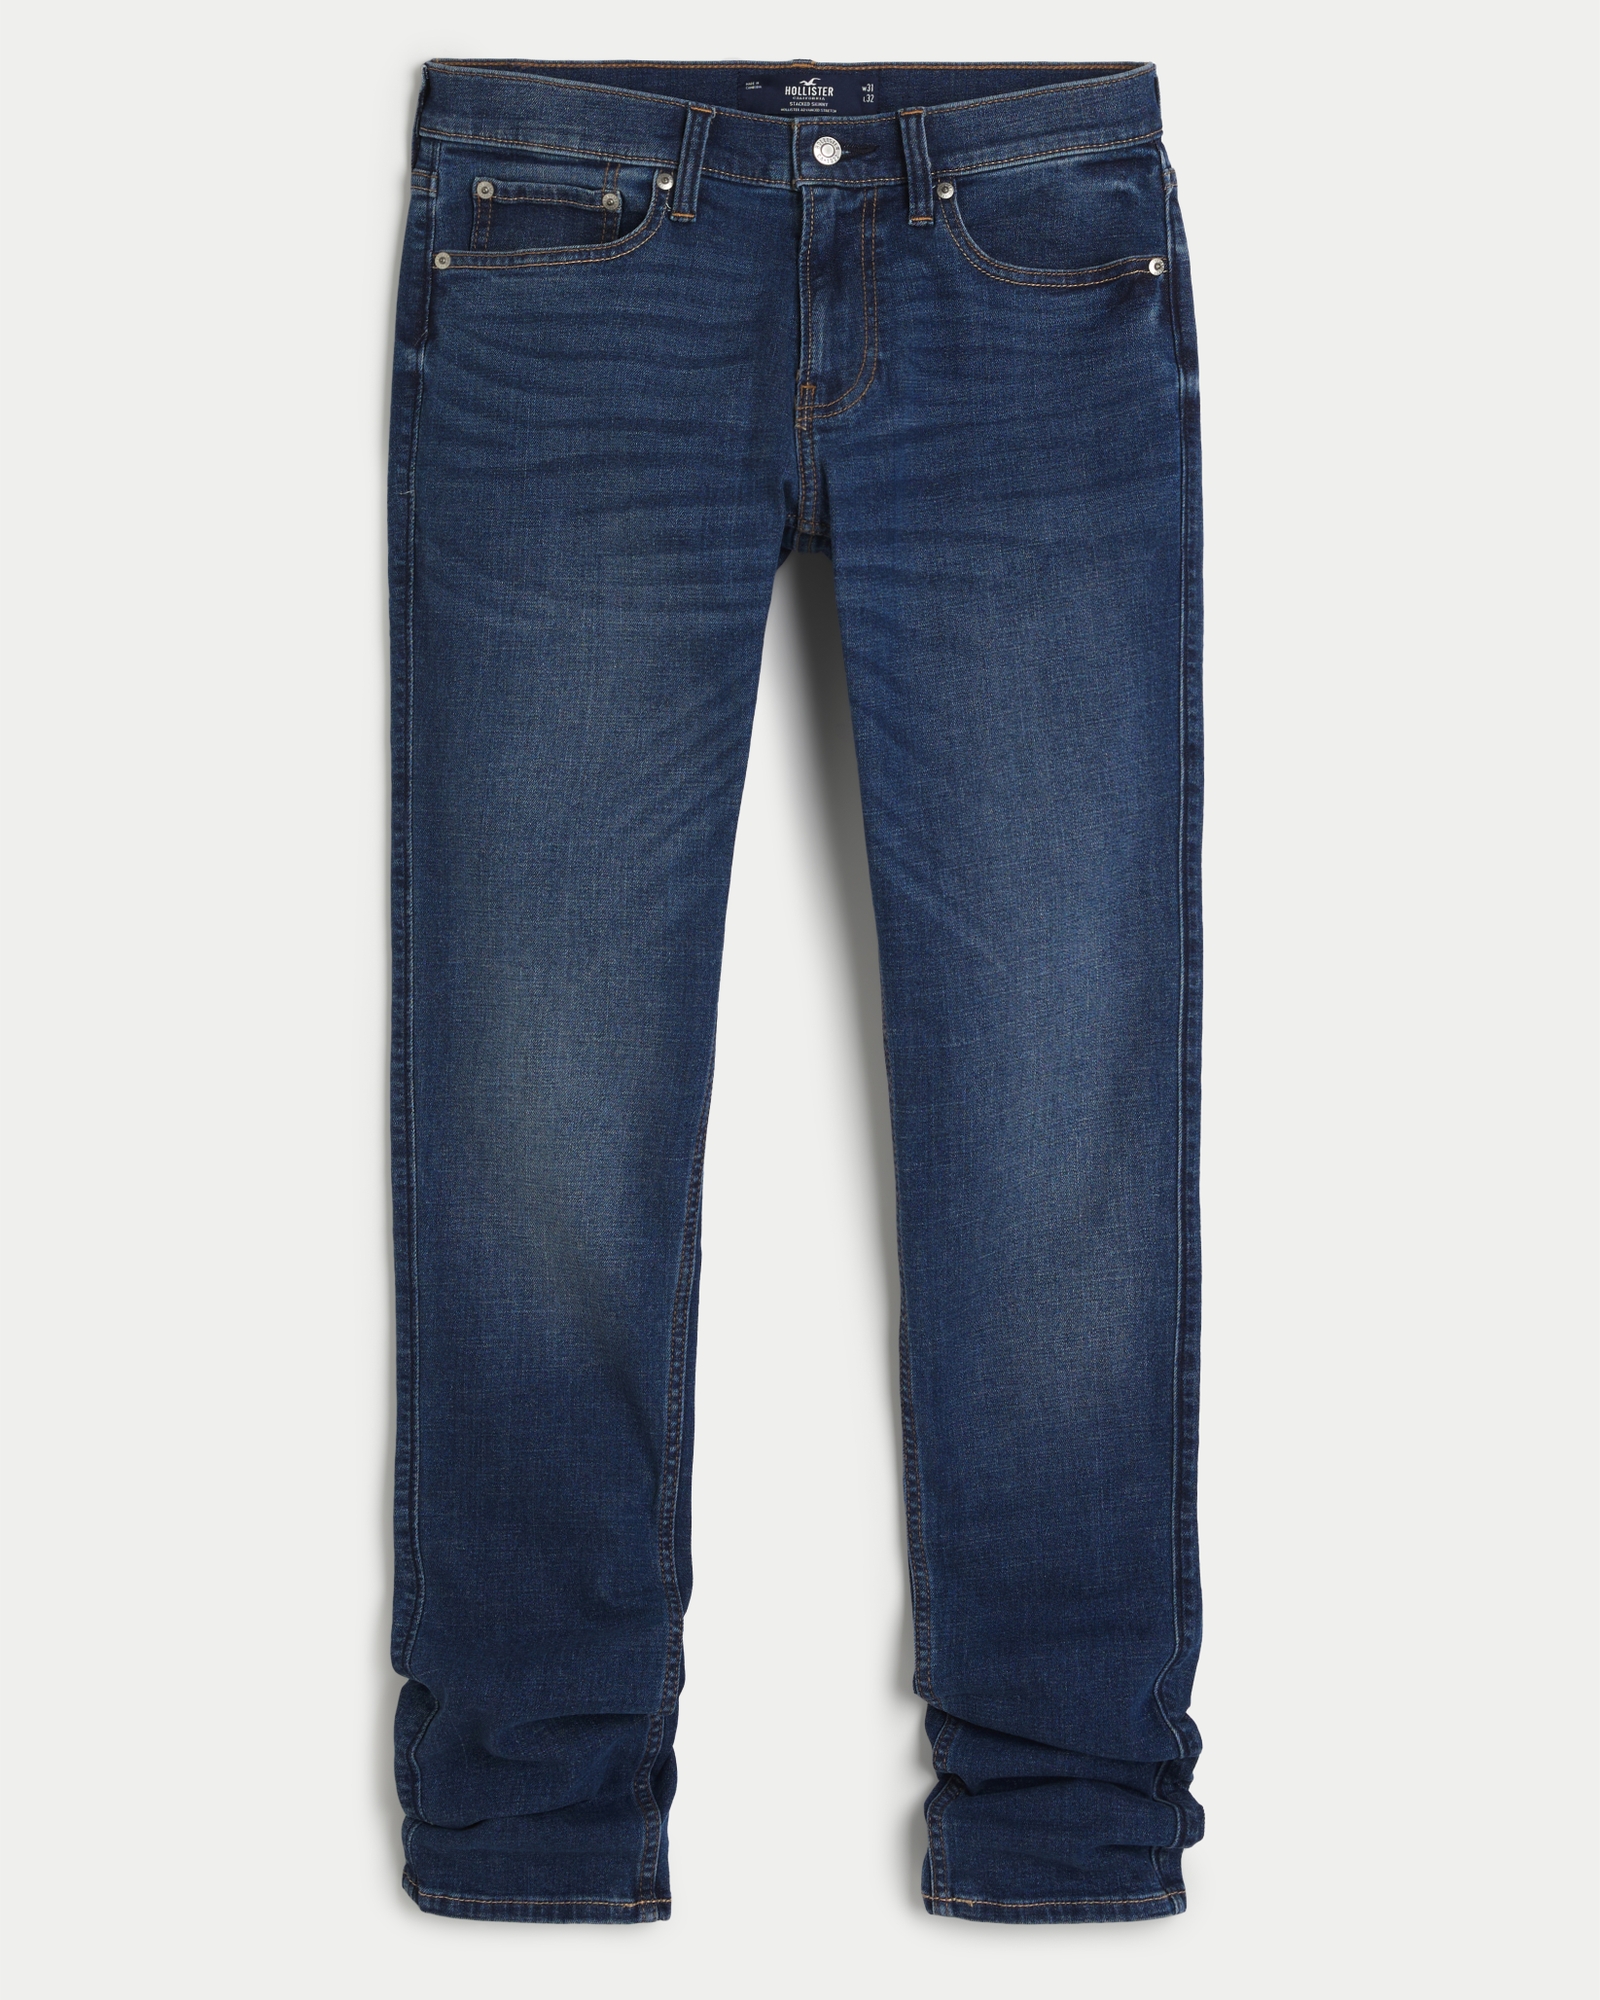 Hollister Slim Straight Stretch Jeans 28X30 - beyond exchange